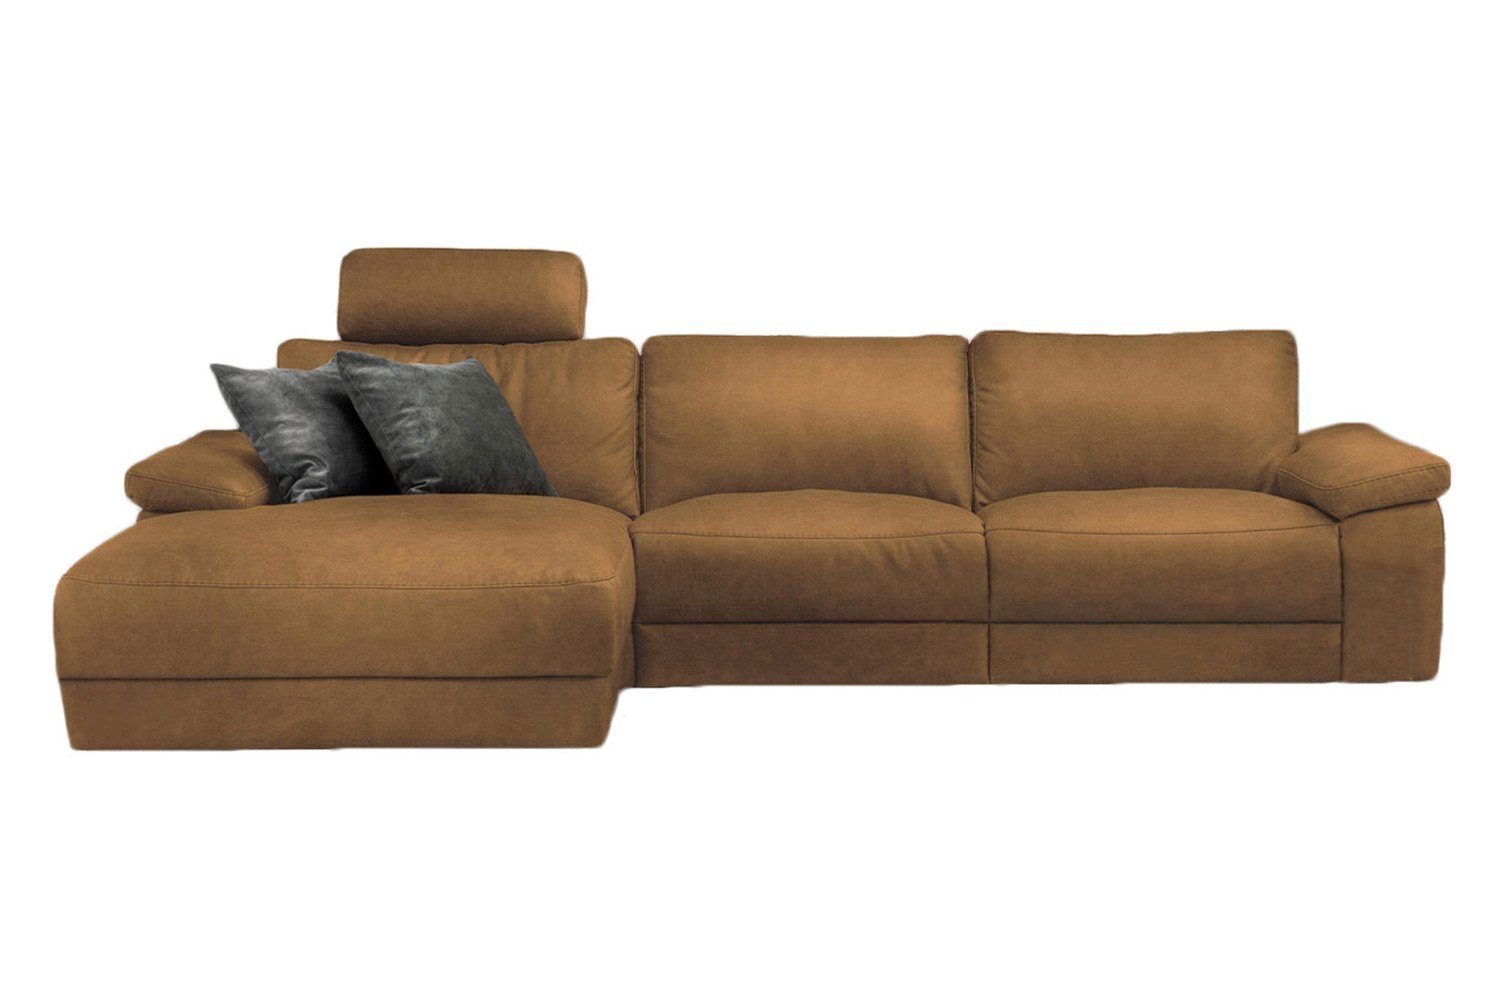 KAWOLA Ecksofa LOLA Stoff od. versch. Sofa XL, Recamiere od. Leder, links, rechts Farben